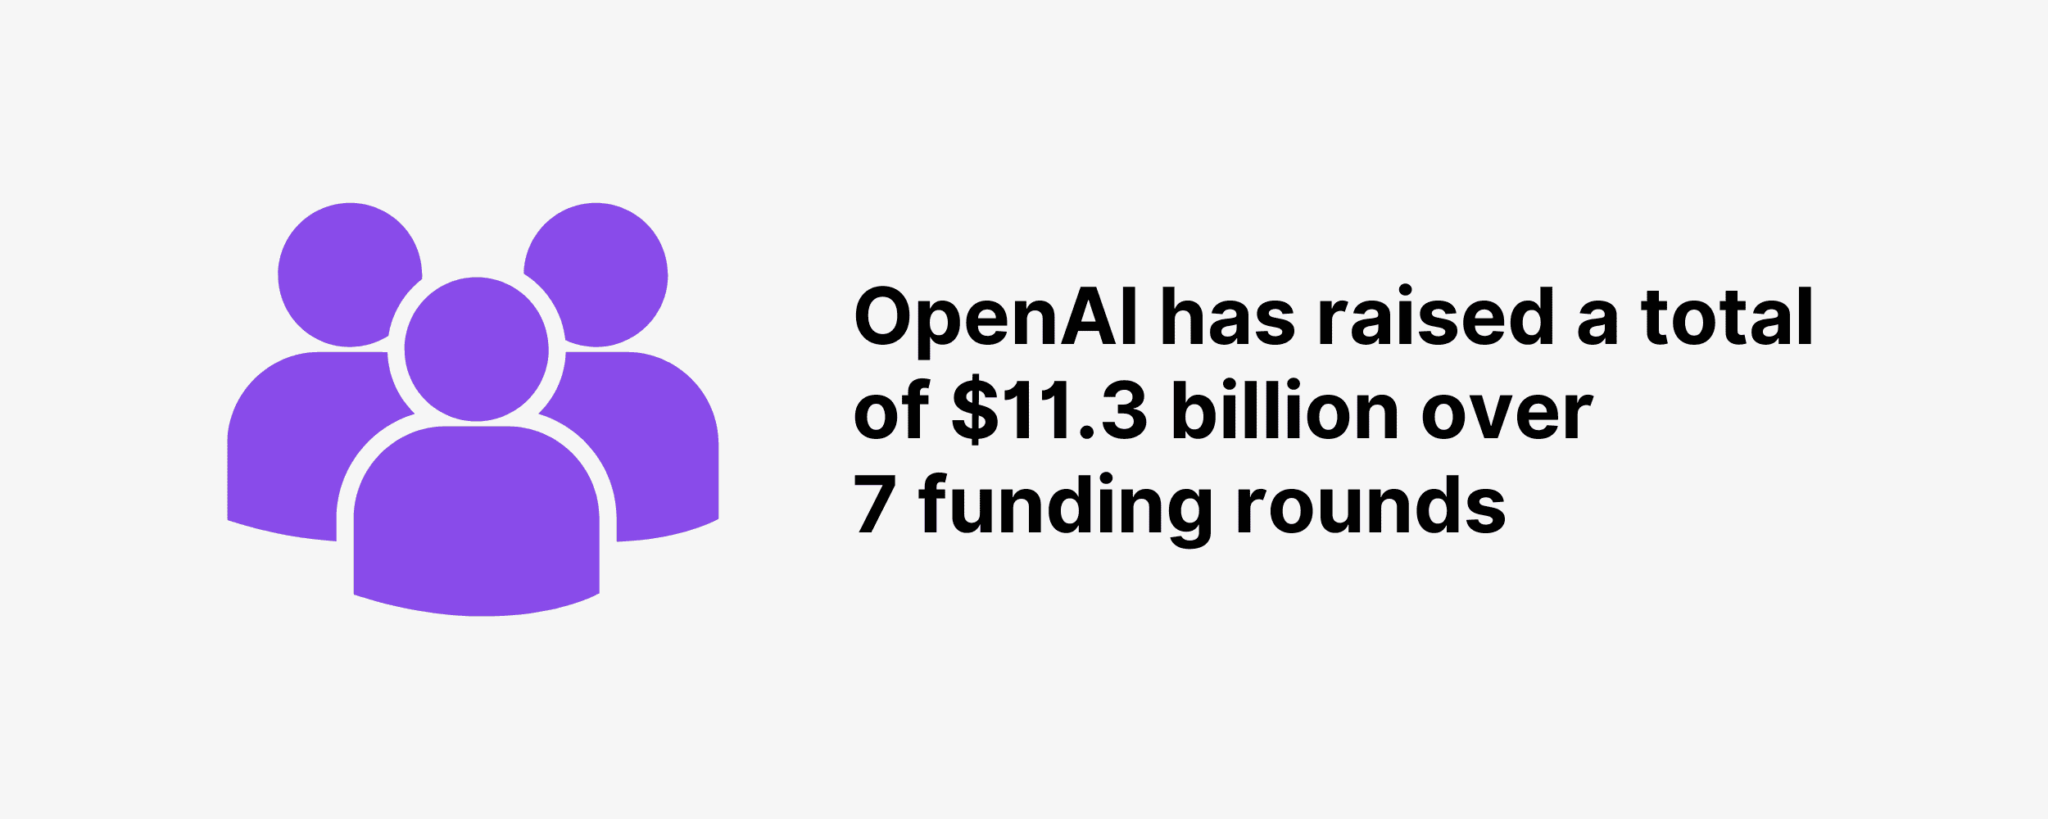 openai-funding ChatGPT / OpenAI Statistics: How Many People Use ChatGPT?